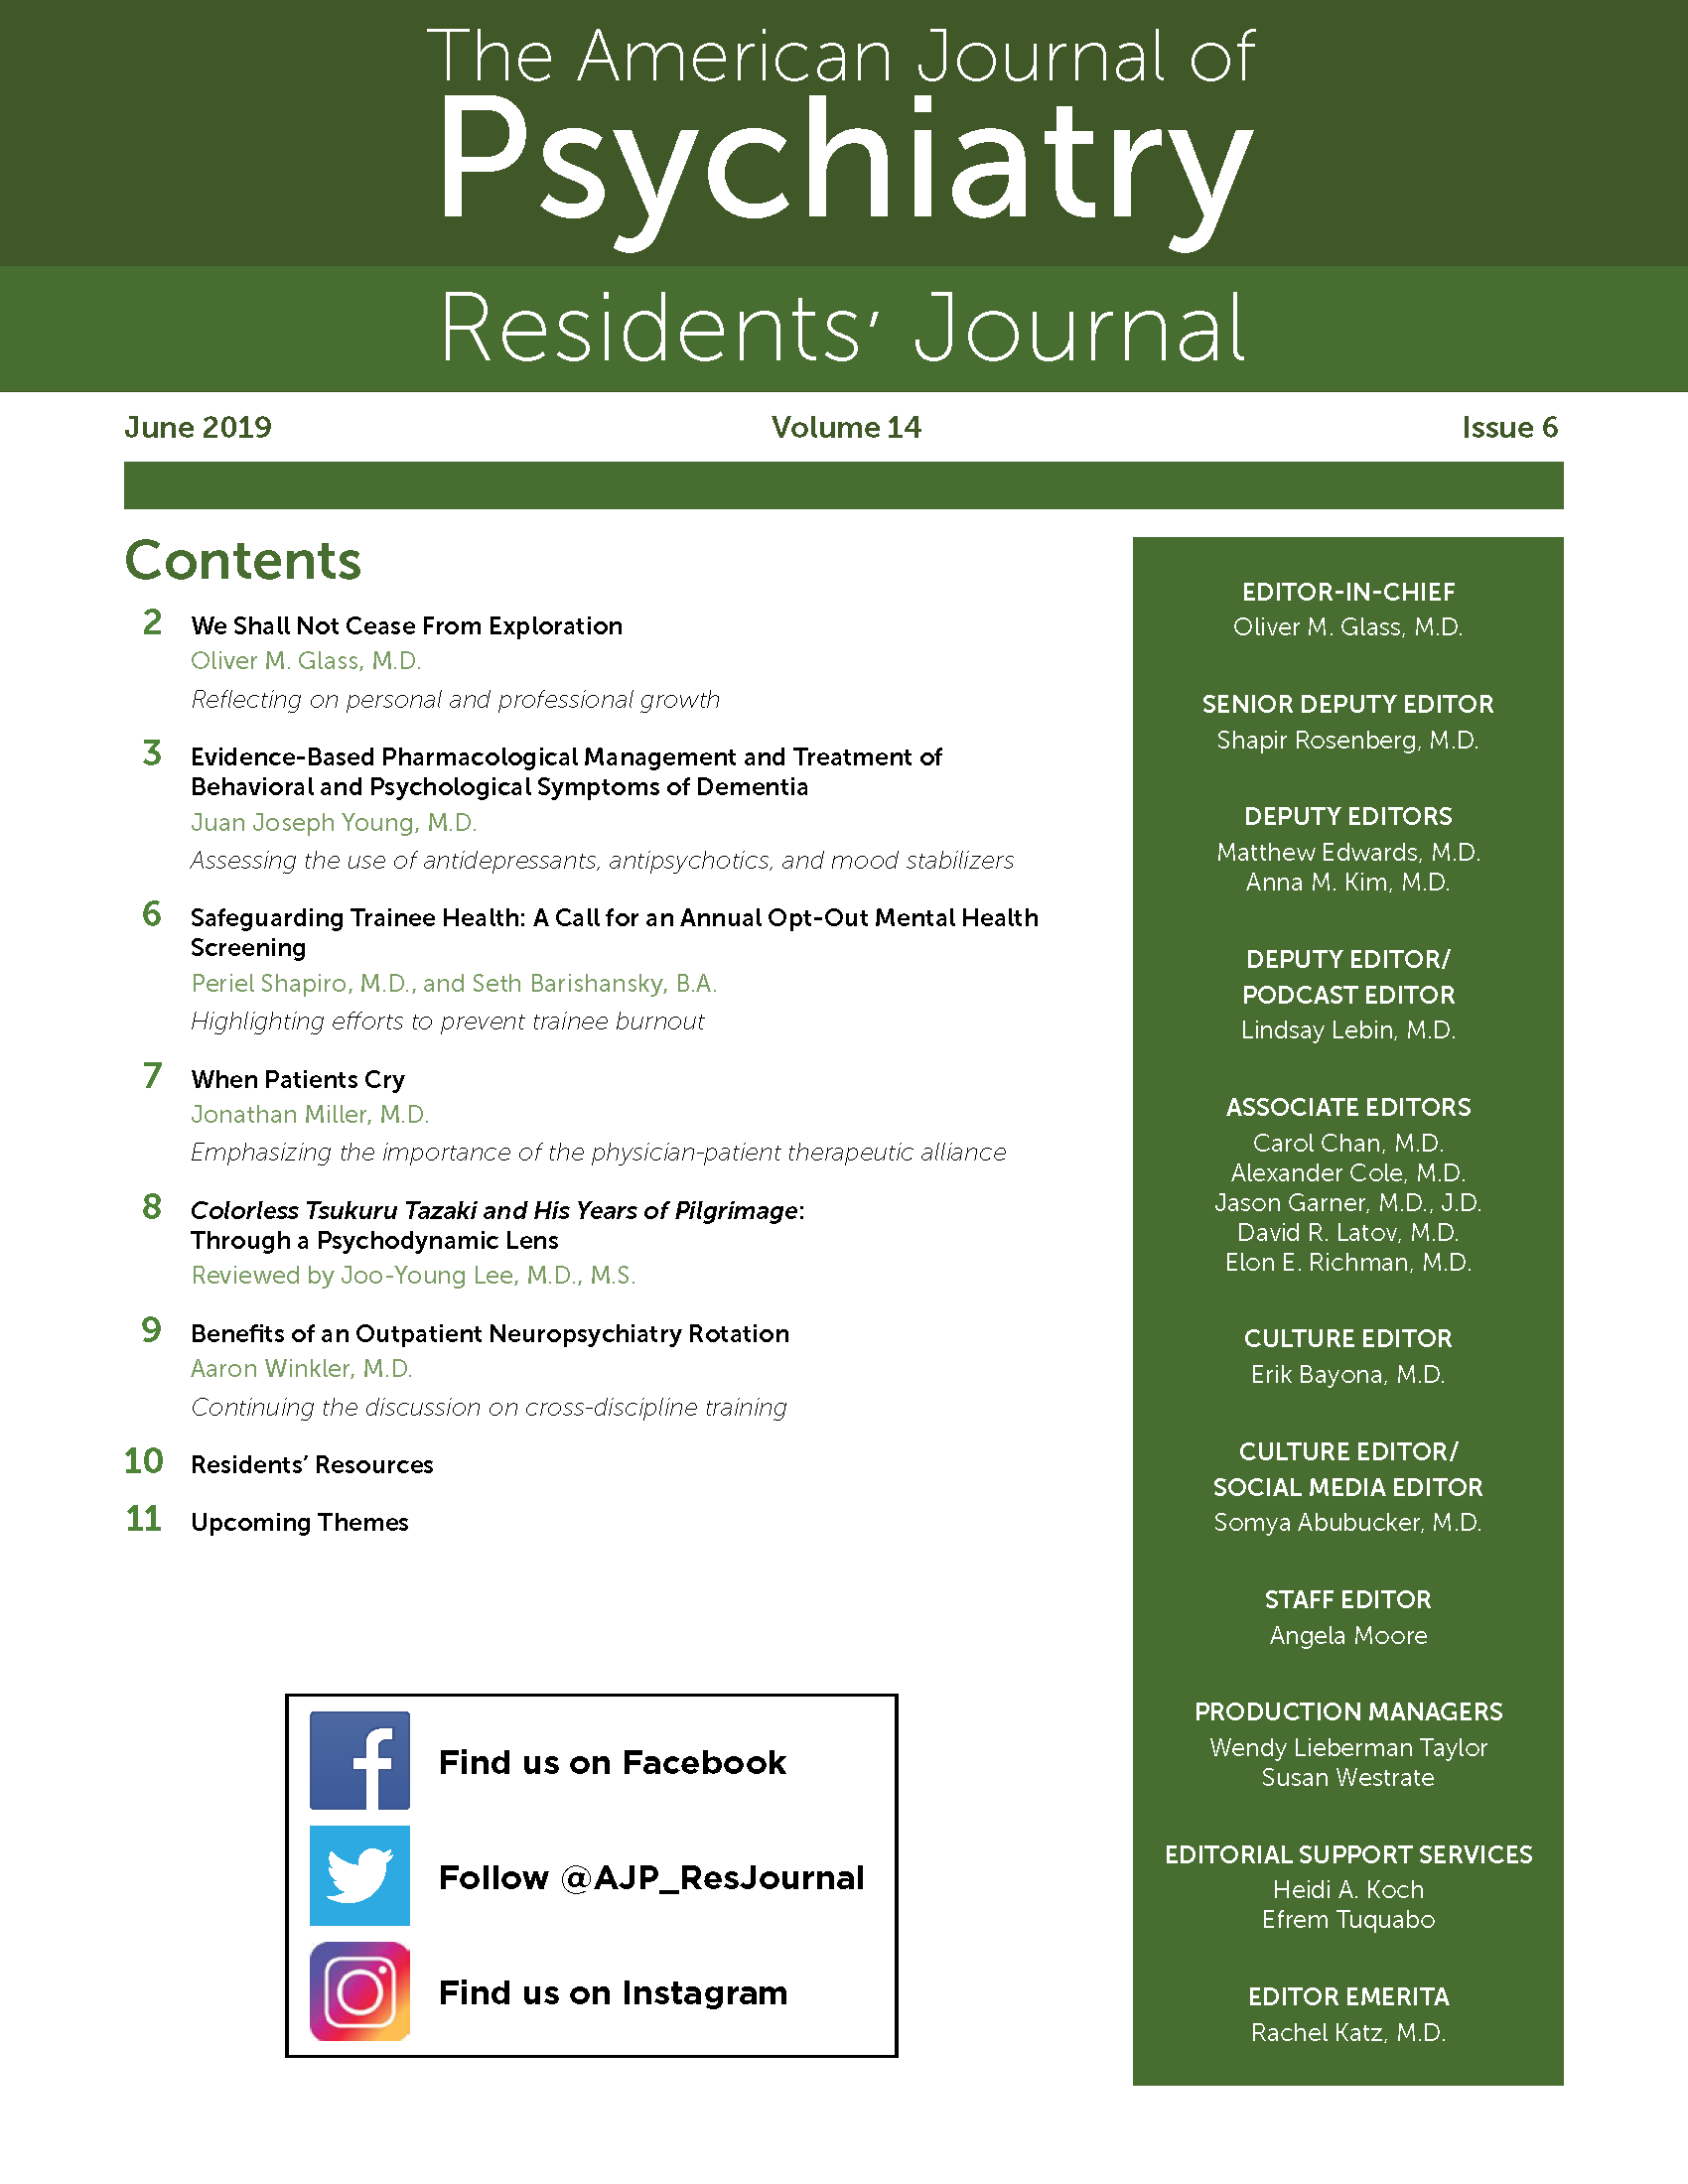 Residents' Journal